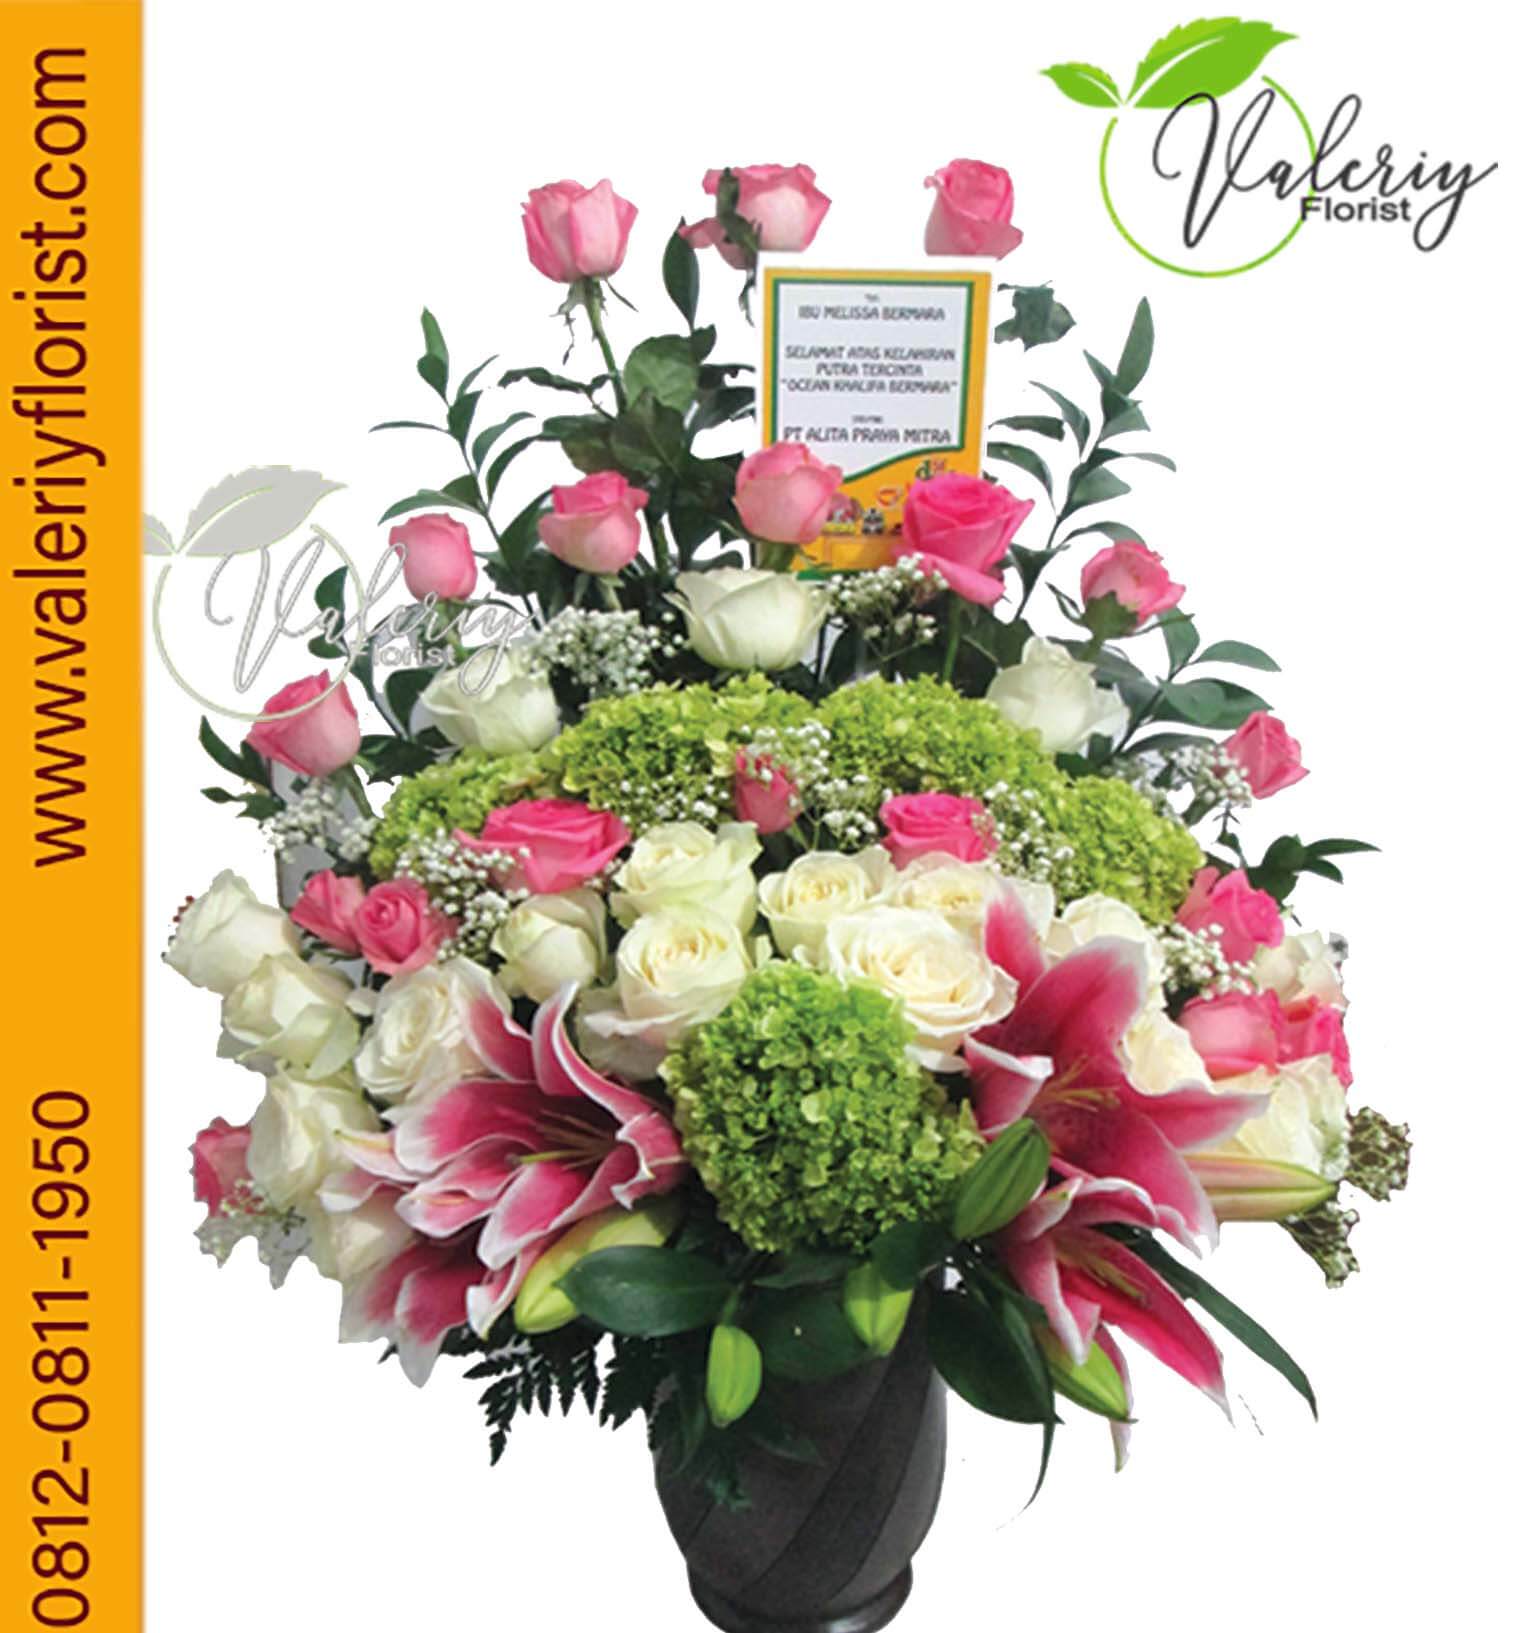 Toko Bunga Meruya Selatan Florist Online